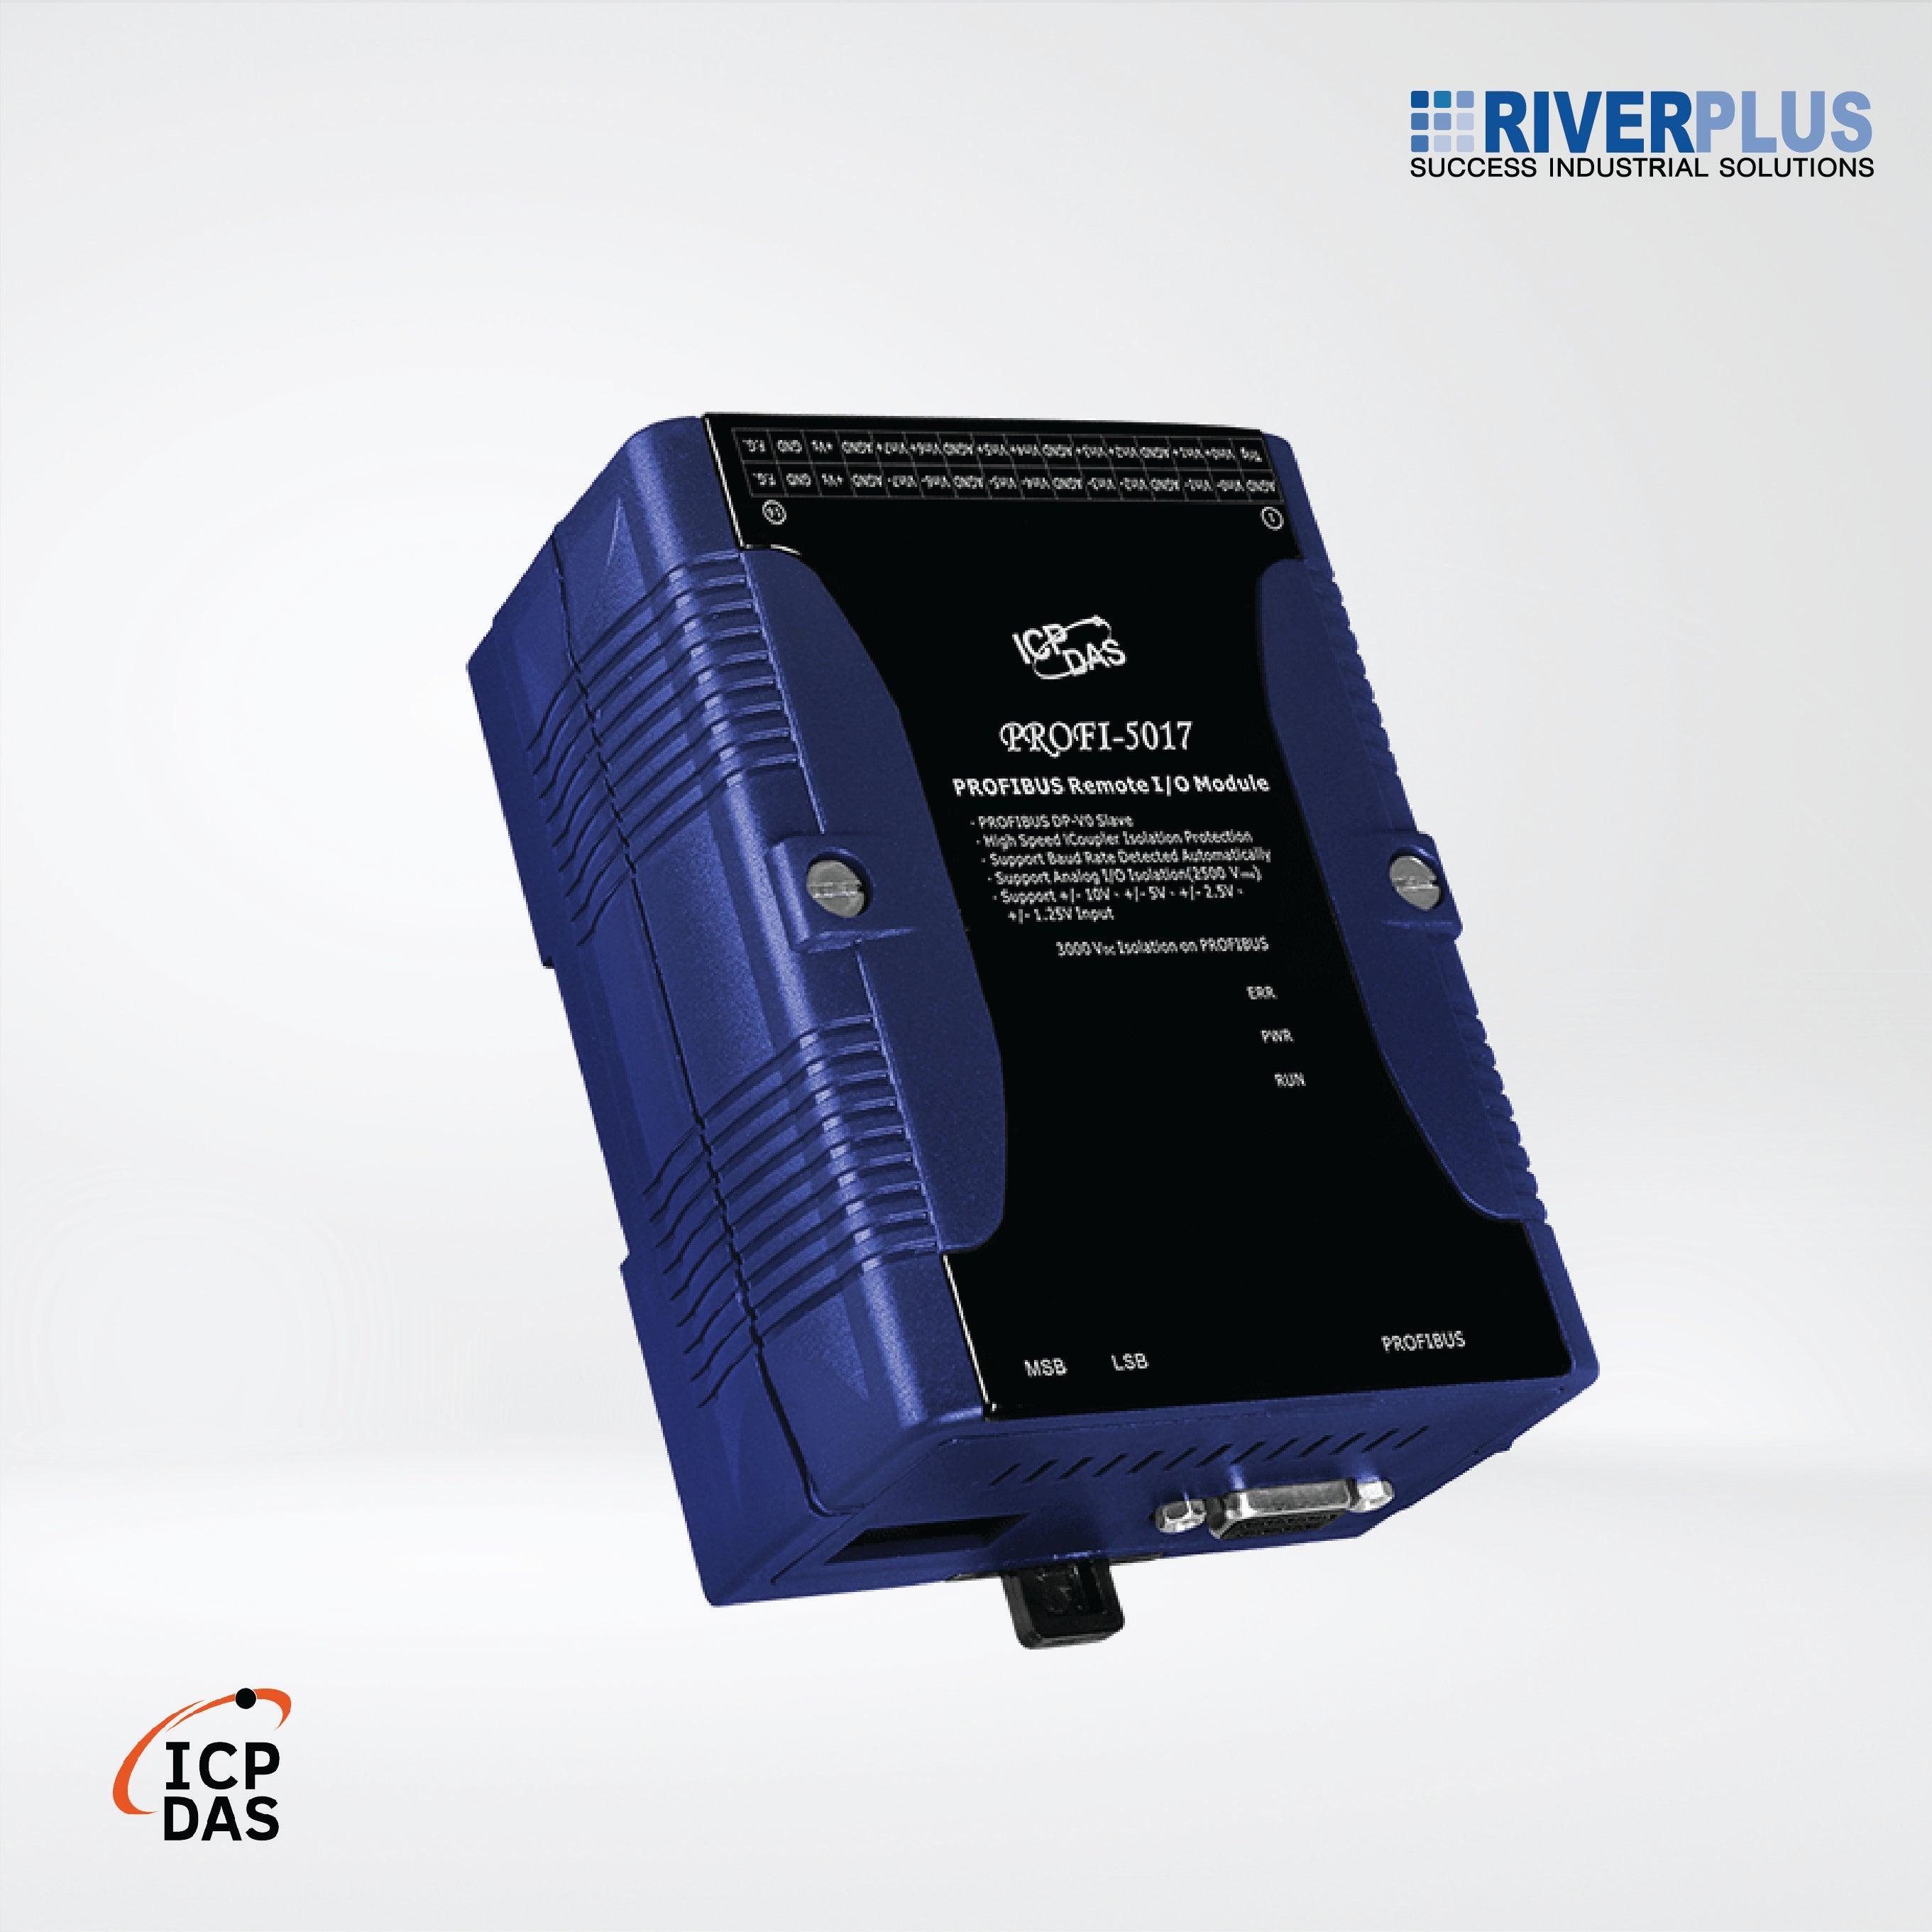 PROFI-5017 PROFIBUS Remote I/O Module (8-channel Isolated Analog Voltage Input) - Riverplus